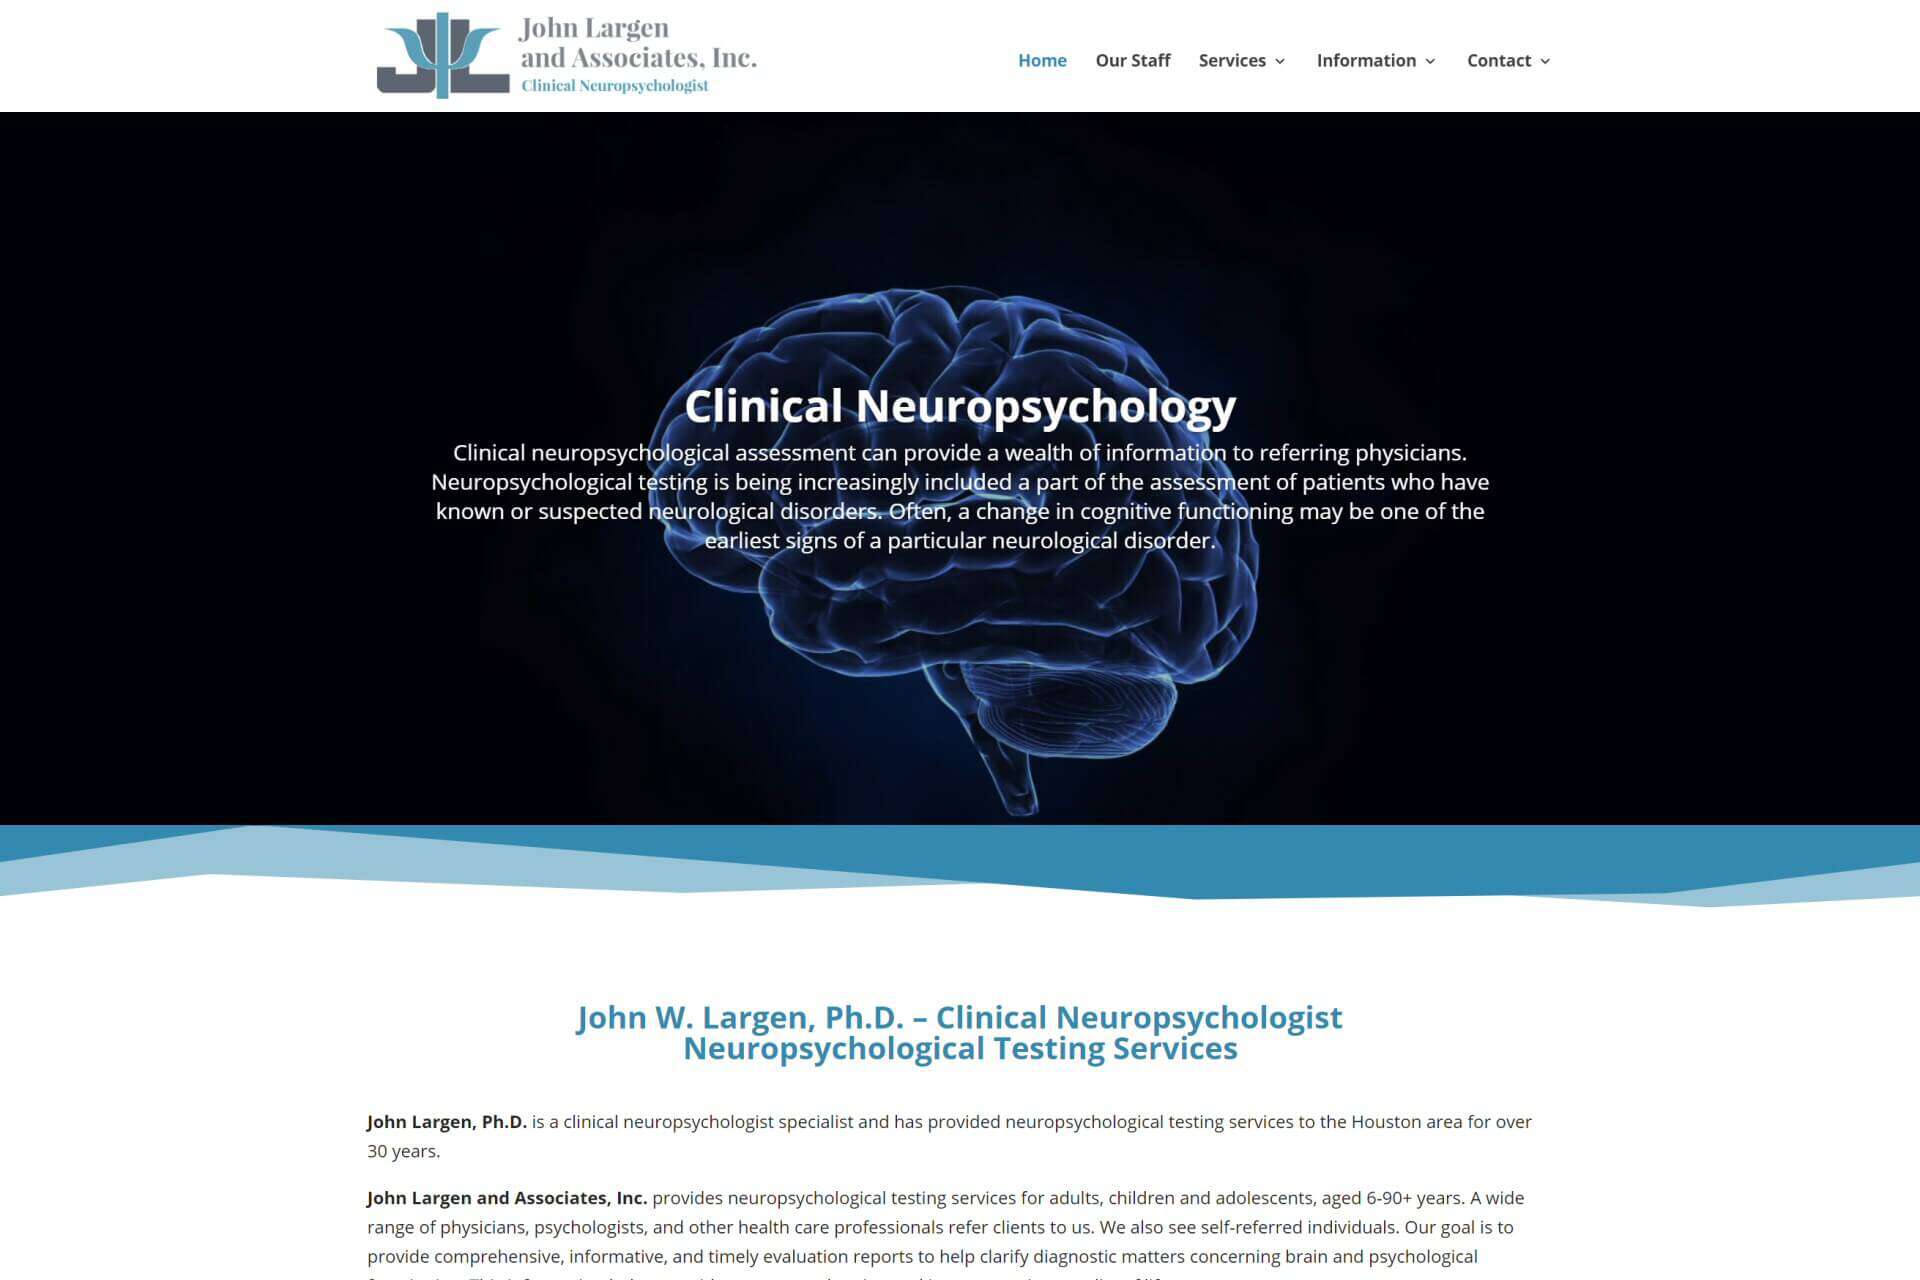 John W. Largen & Associates Neuropsychological Testing Services - Website Links for Marquise Pools #1 Best Pool Builder